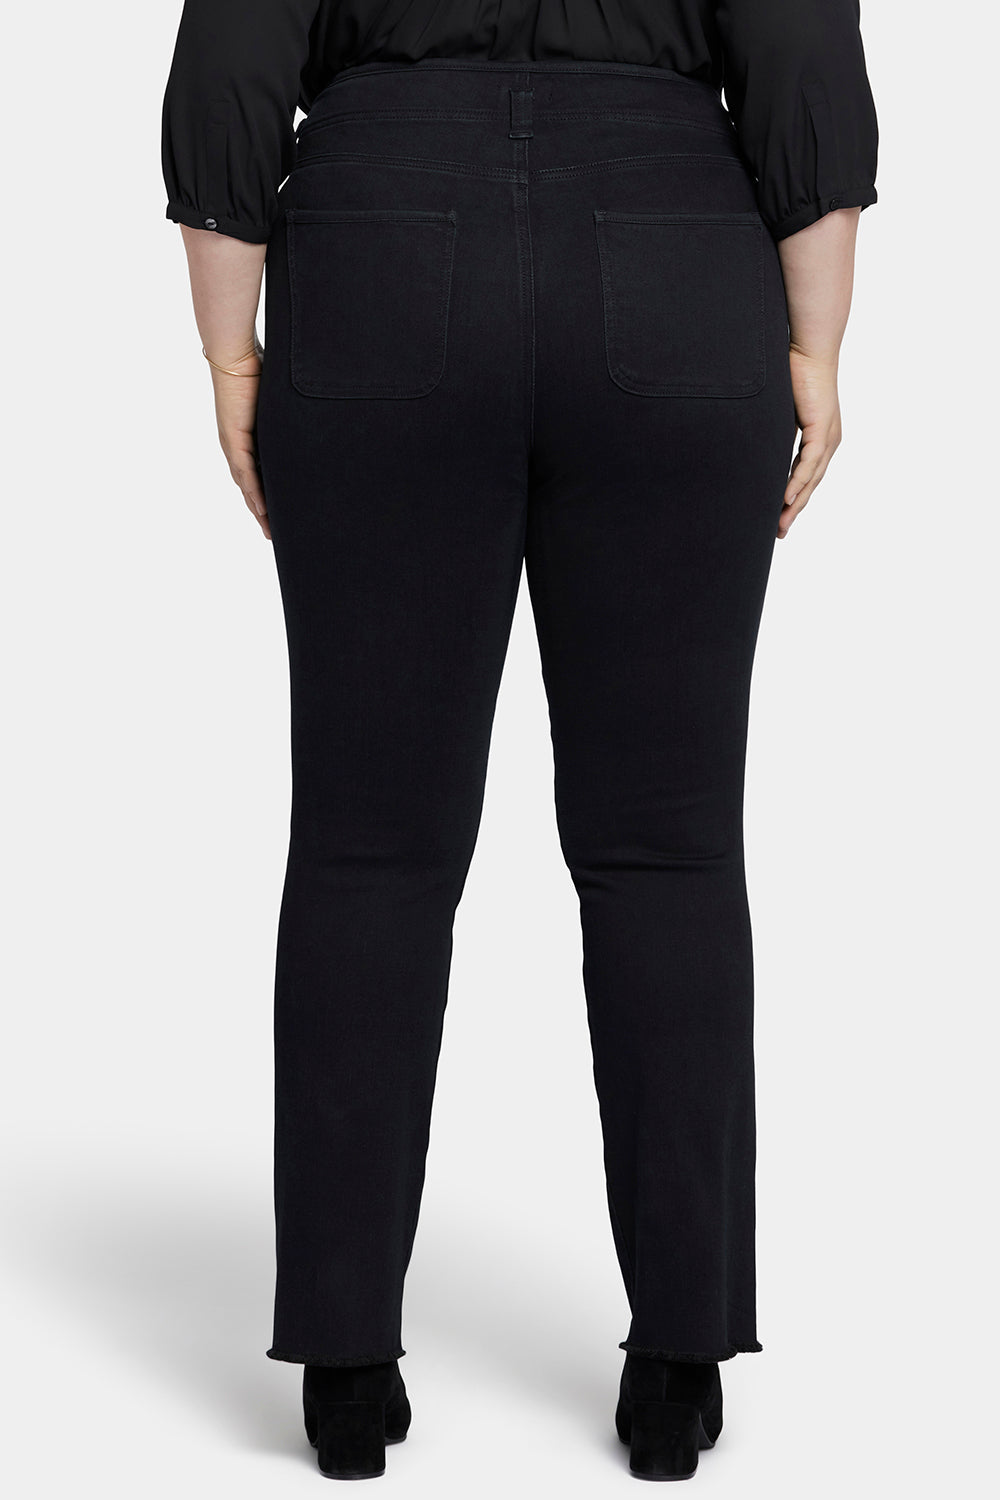 Marilyn Straight Jeans In Plus Size - Huntley